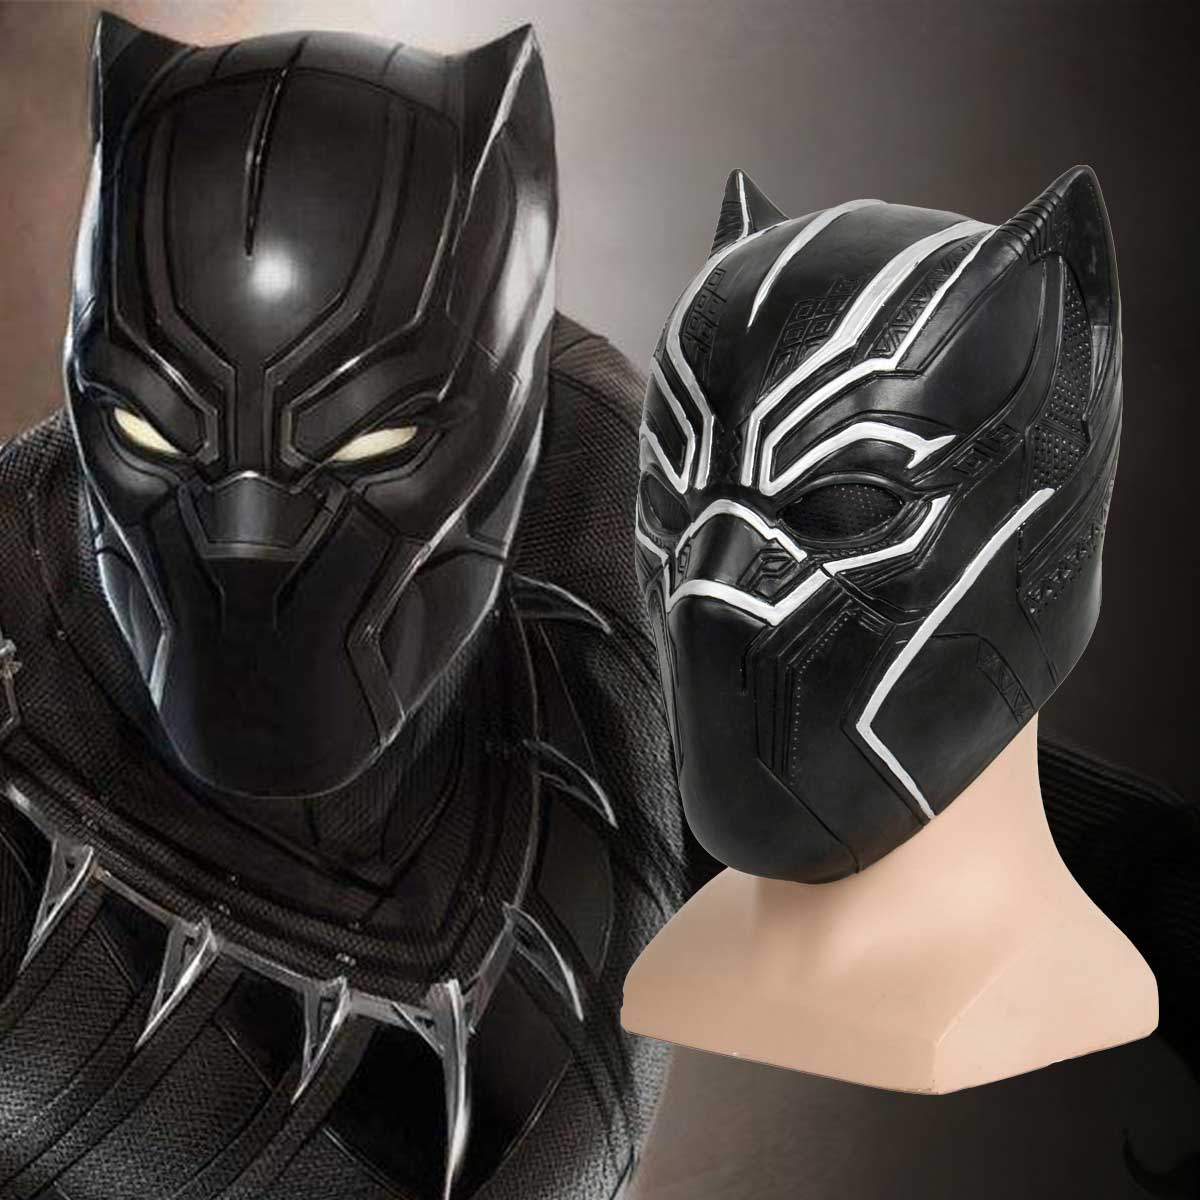 US Marvel BLACK PANTHER Captain America Civil War Cosplay Prop Full Mask 